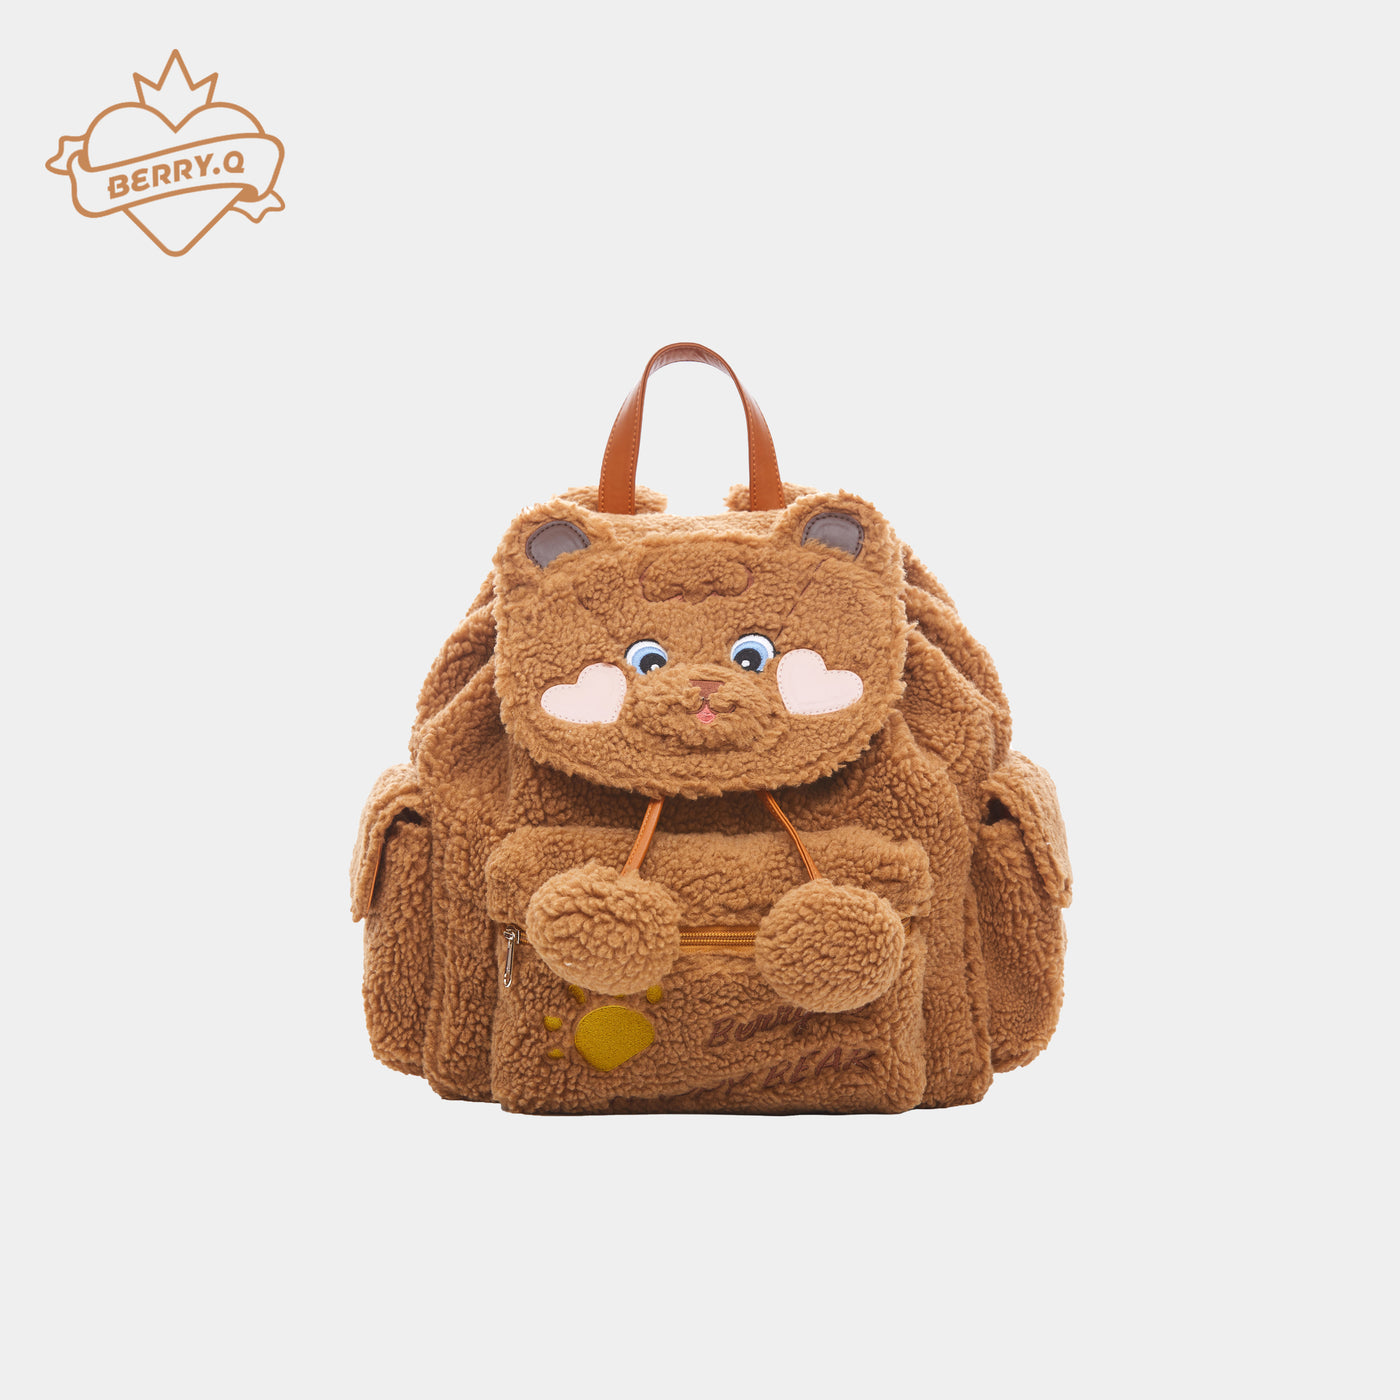 BerryQ~Chubbybear~Kawaii Lolita Plush Embroidered Brown Backpack deep brown backpack  